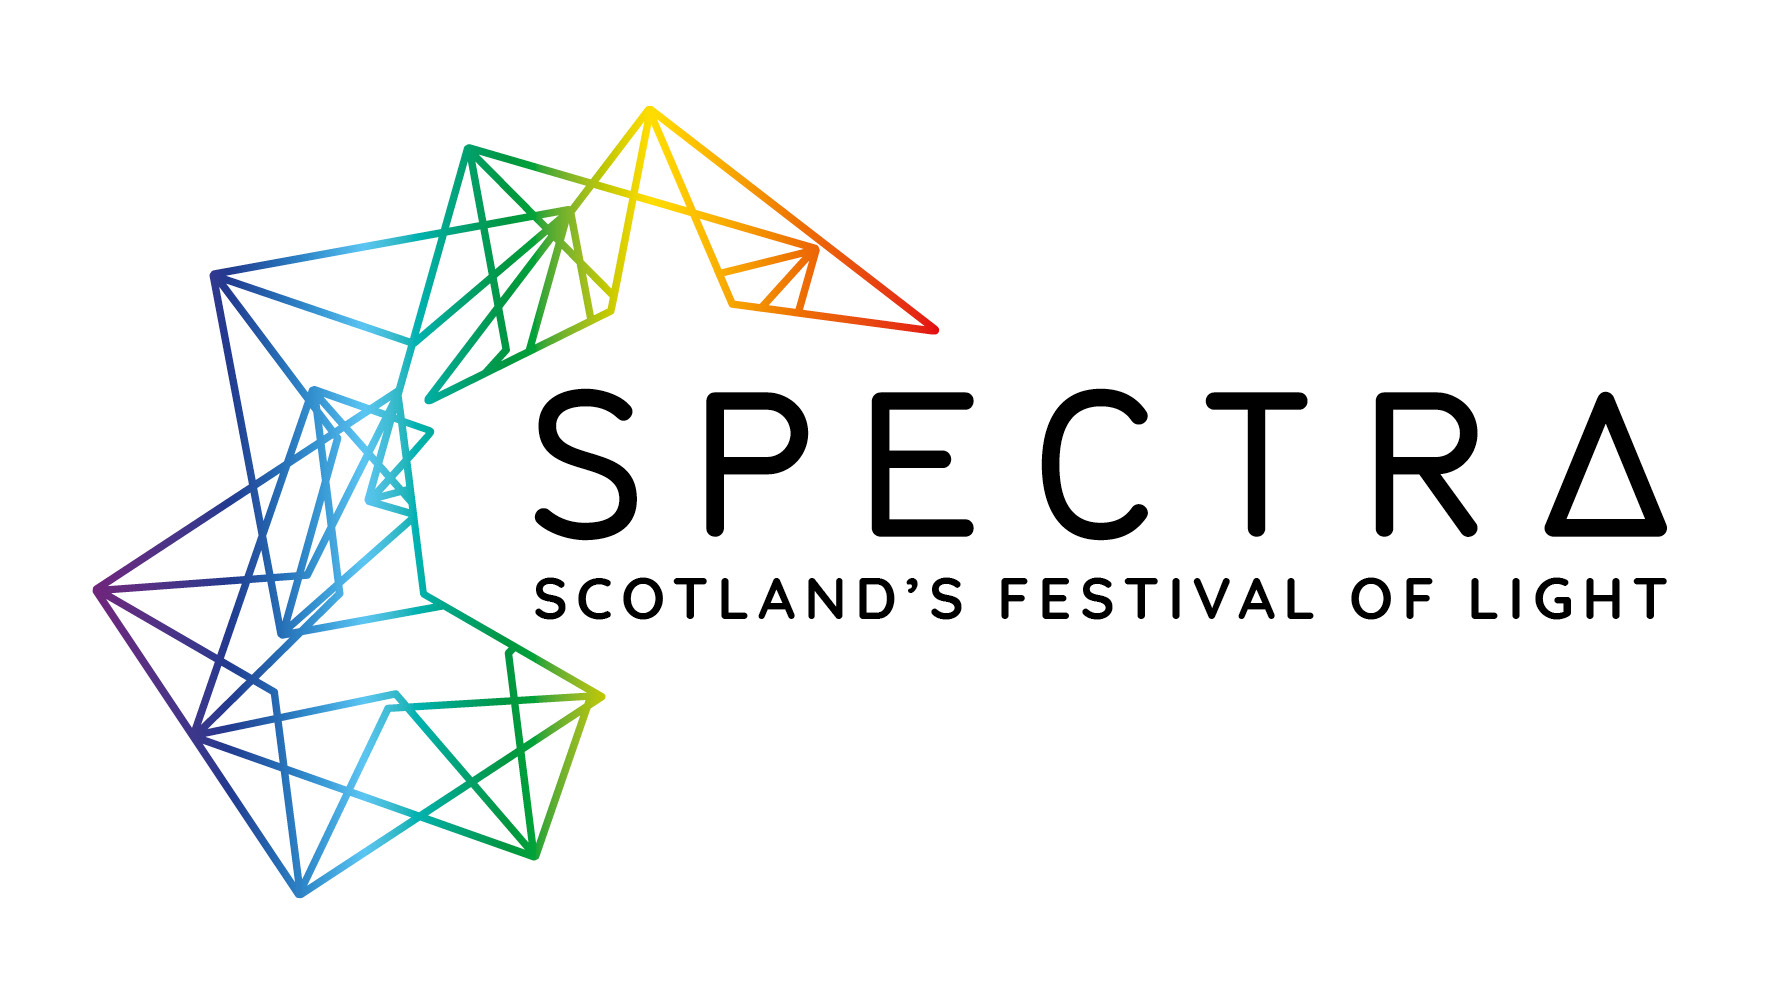 Spectra, Scotland's Festival of Light